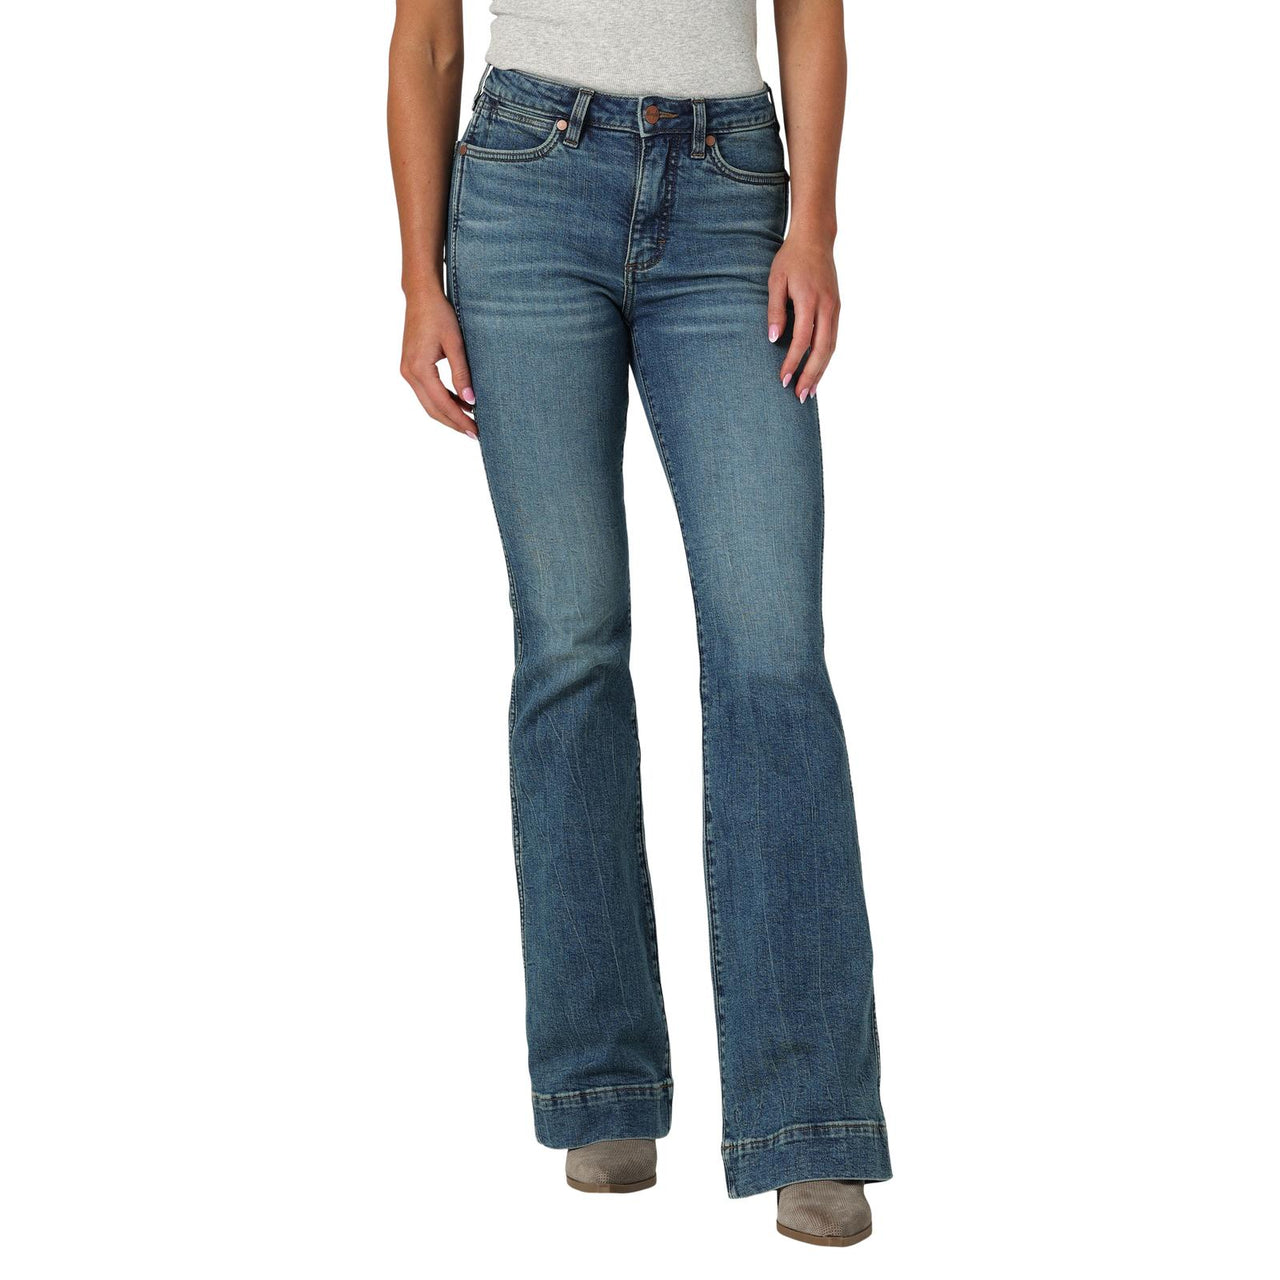 Wrangler Women's Retro Premium Trouser Jeans - Briley